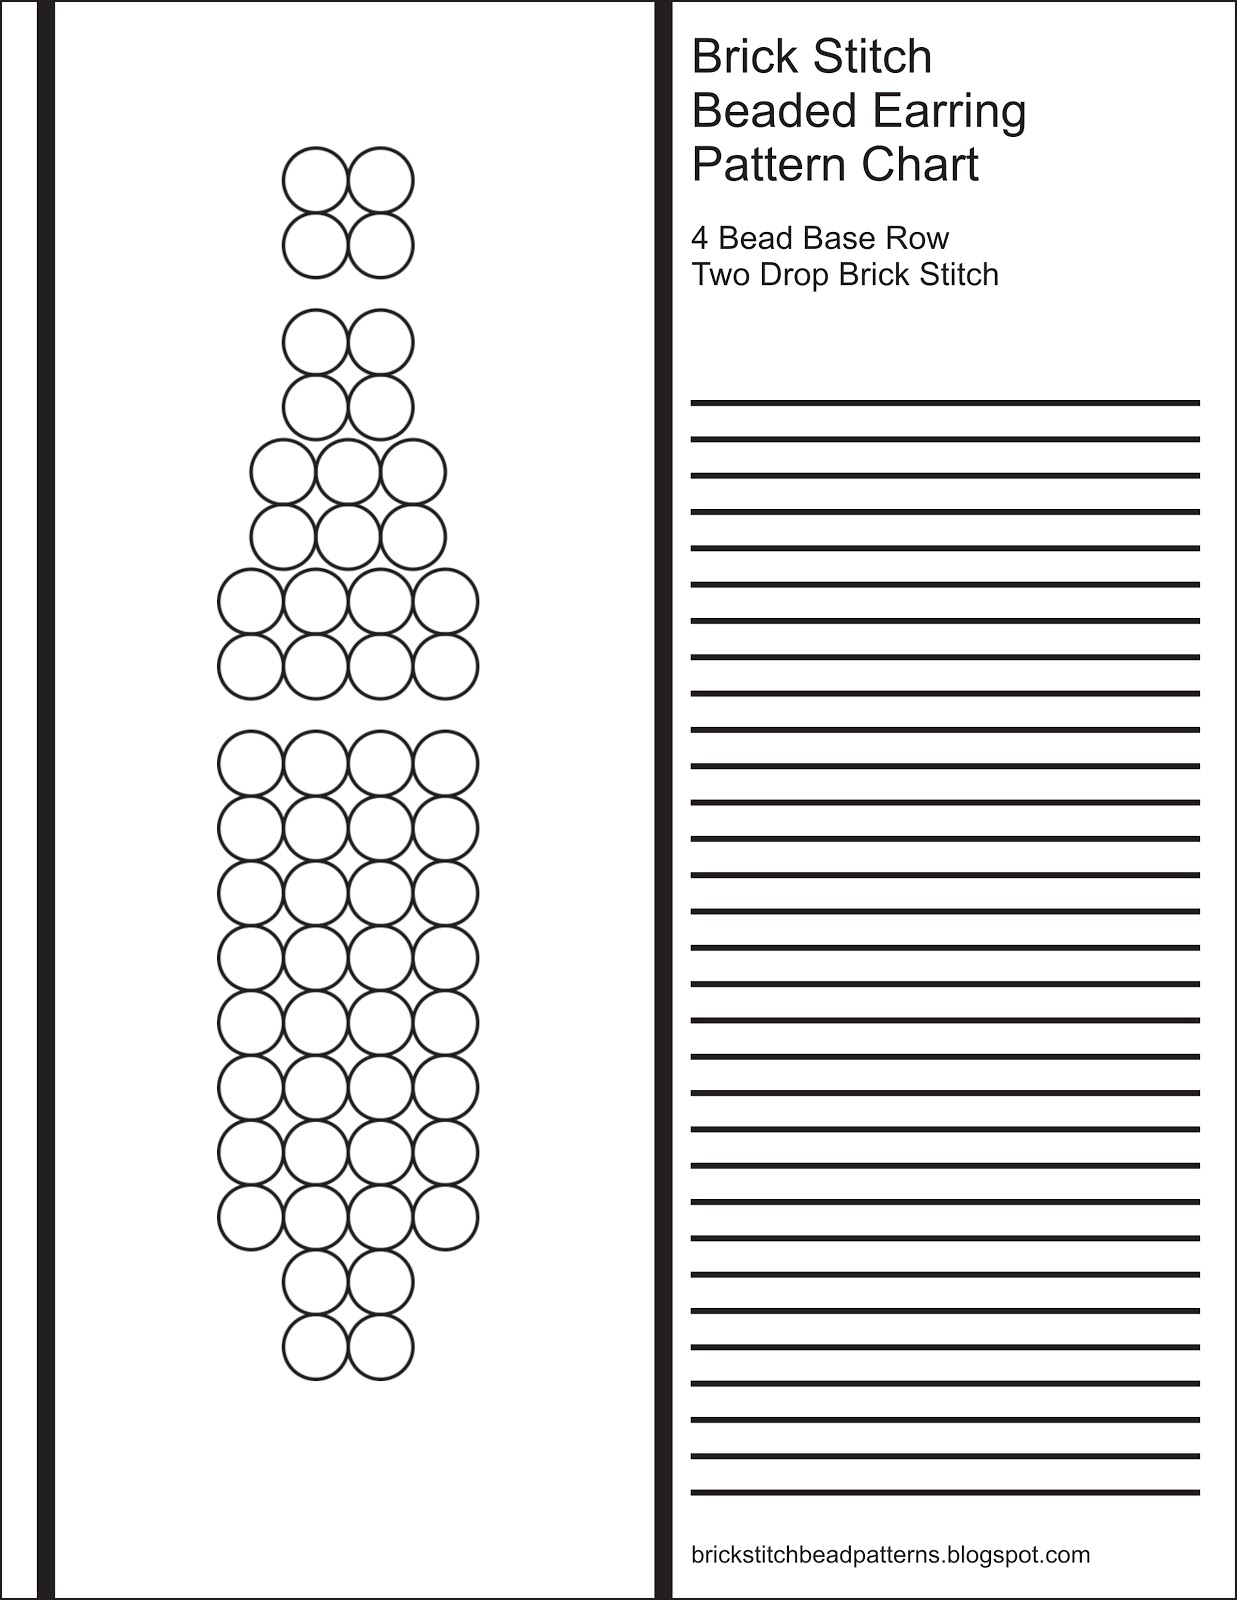 brick-stitch-bead-patterns-journal-4-bead-base-row-2-drop-blank-round